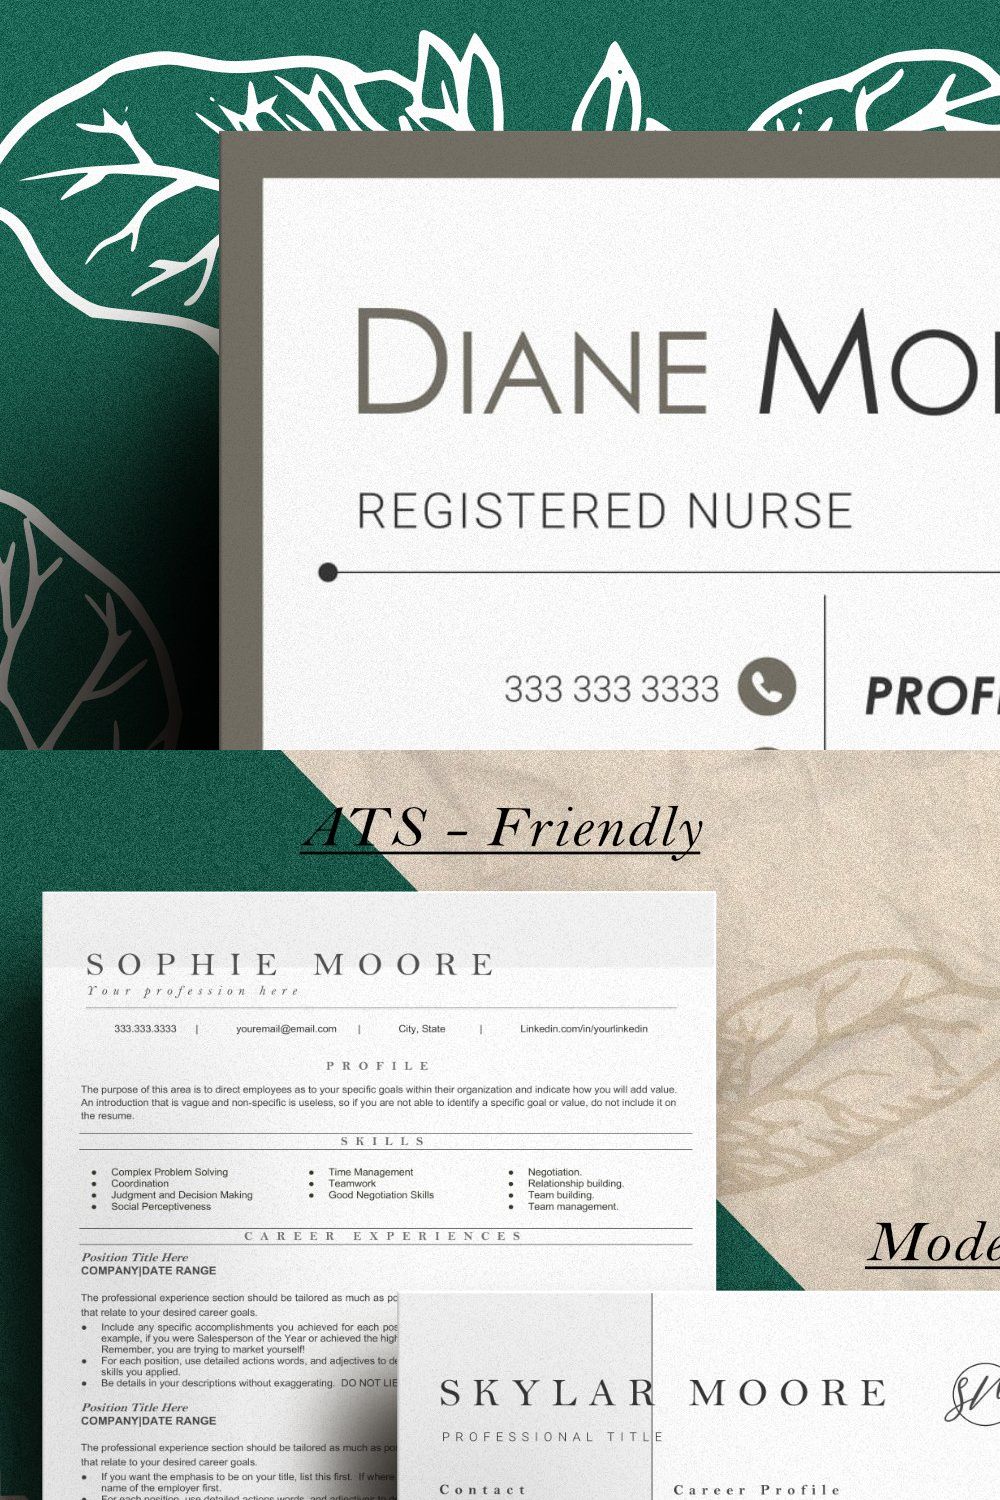 Nurse Resume Template Bundle - Diane pinterest preview image.